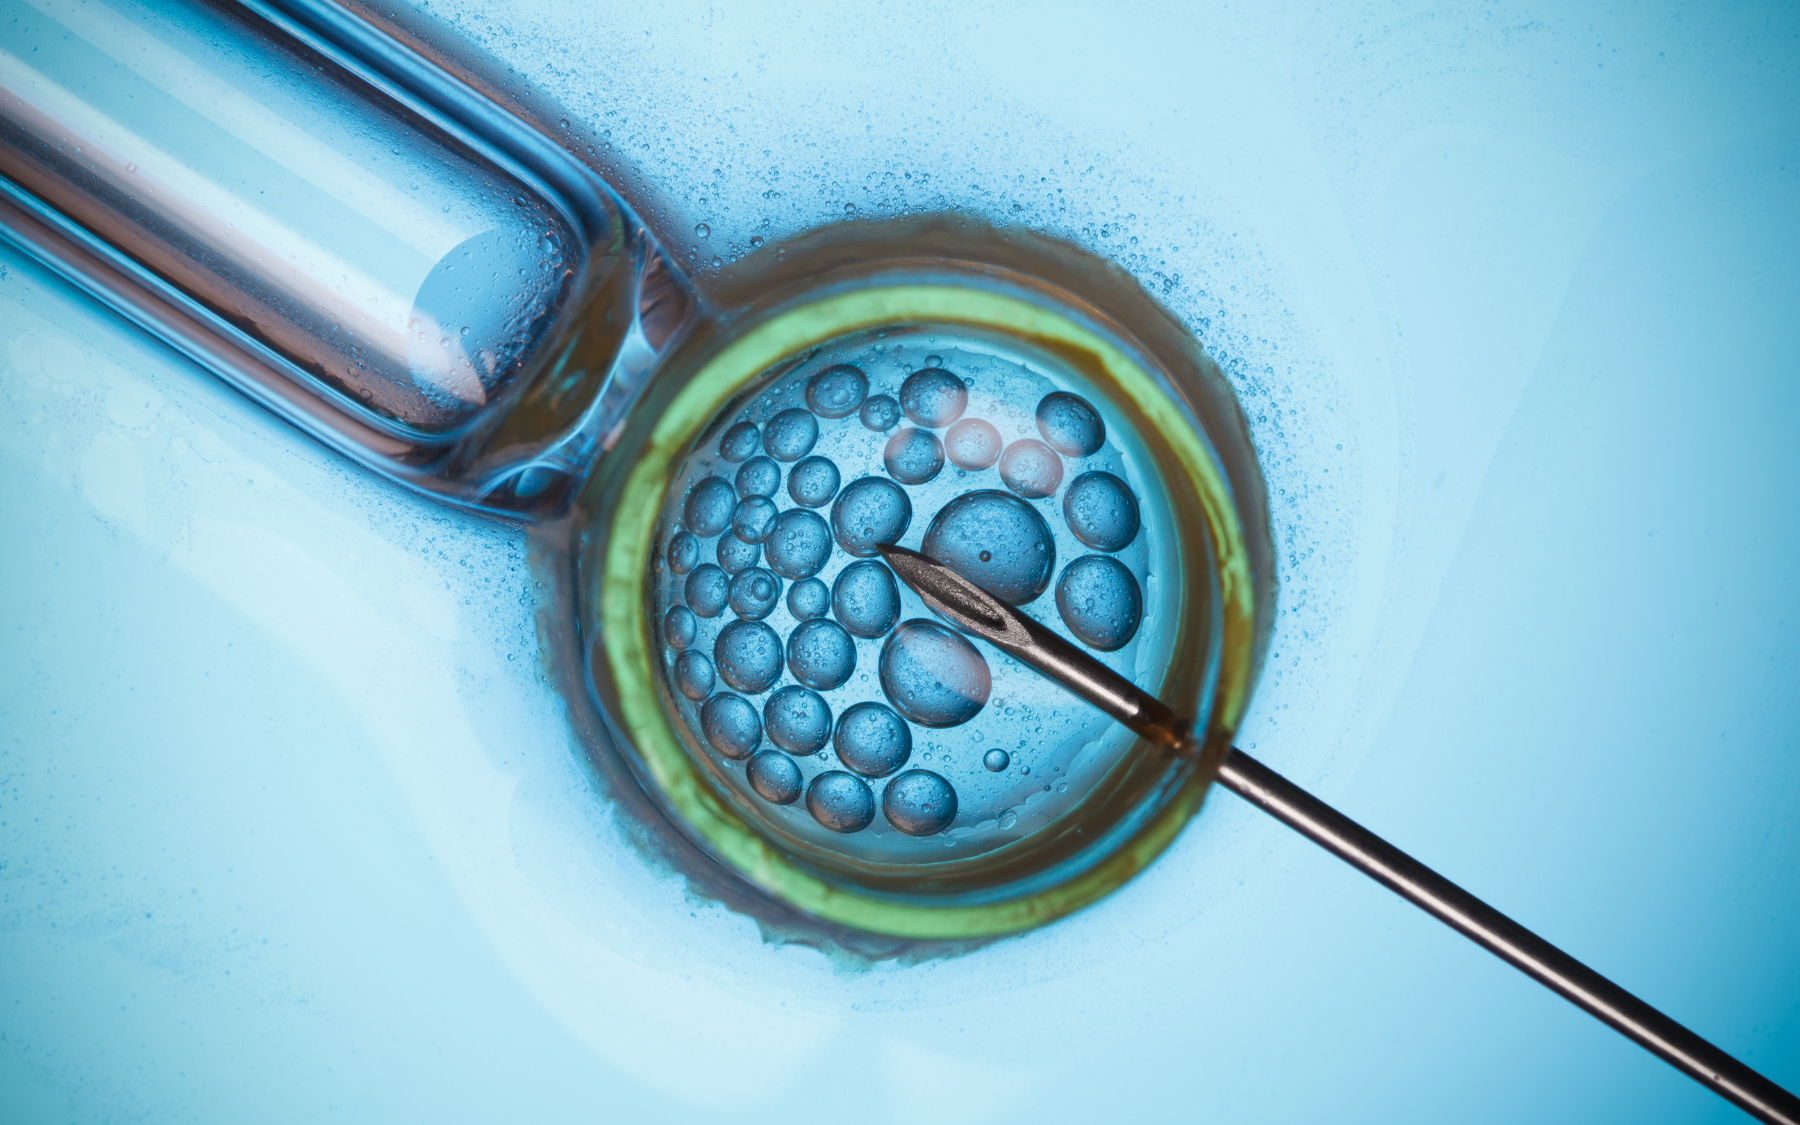 Micro-dissection sperm retrieval